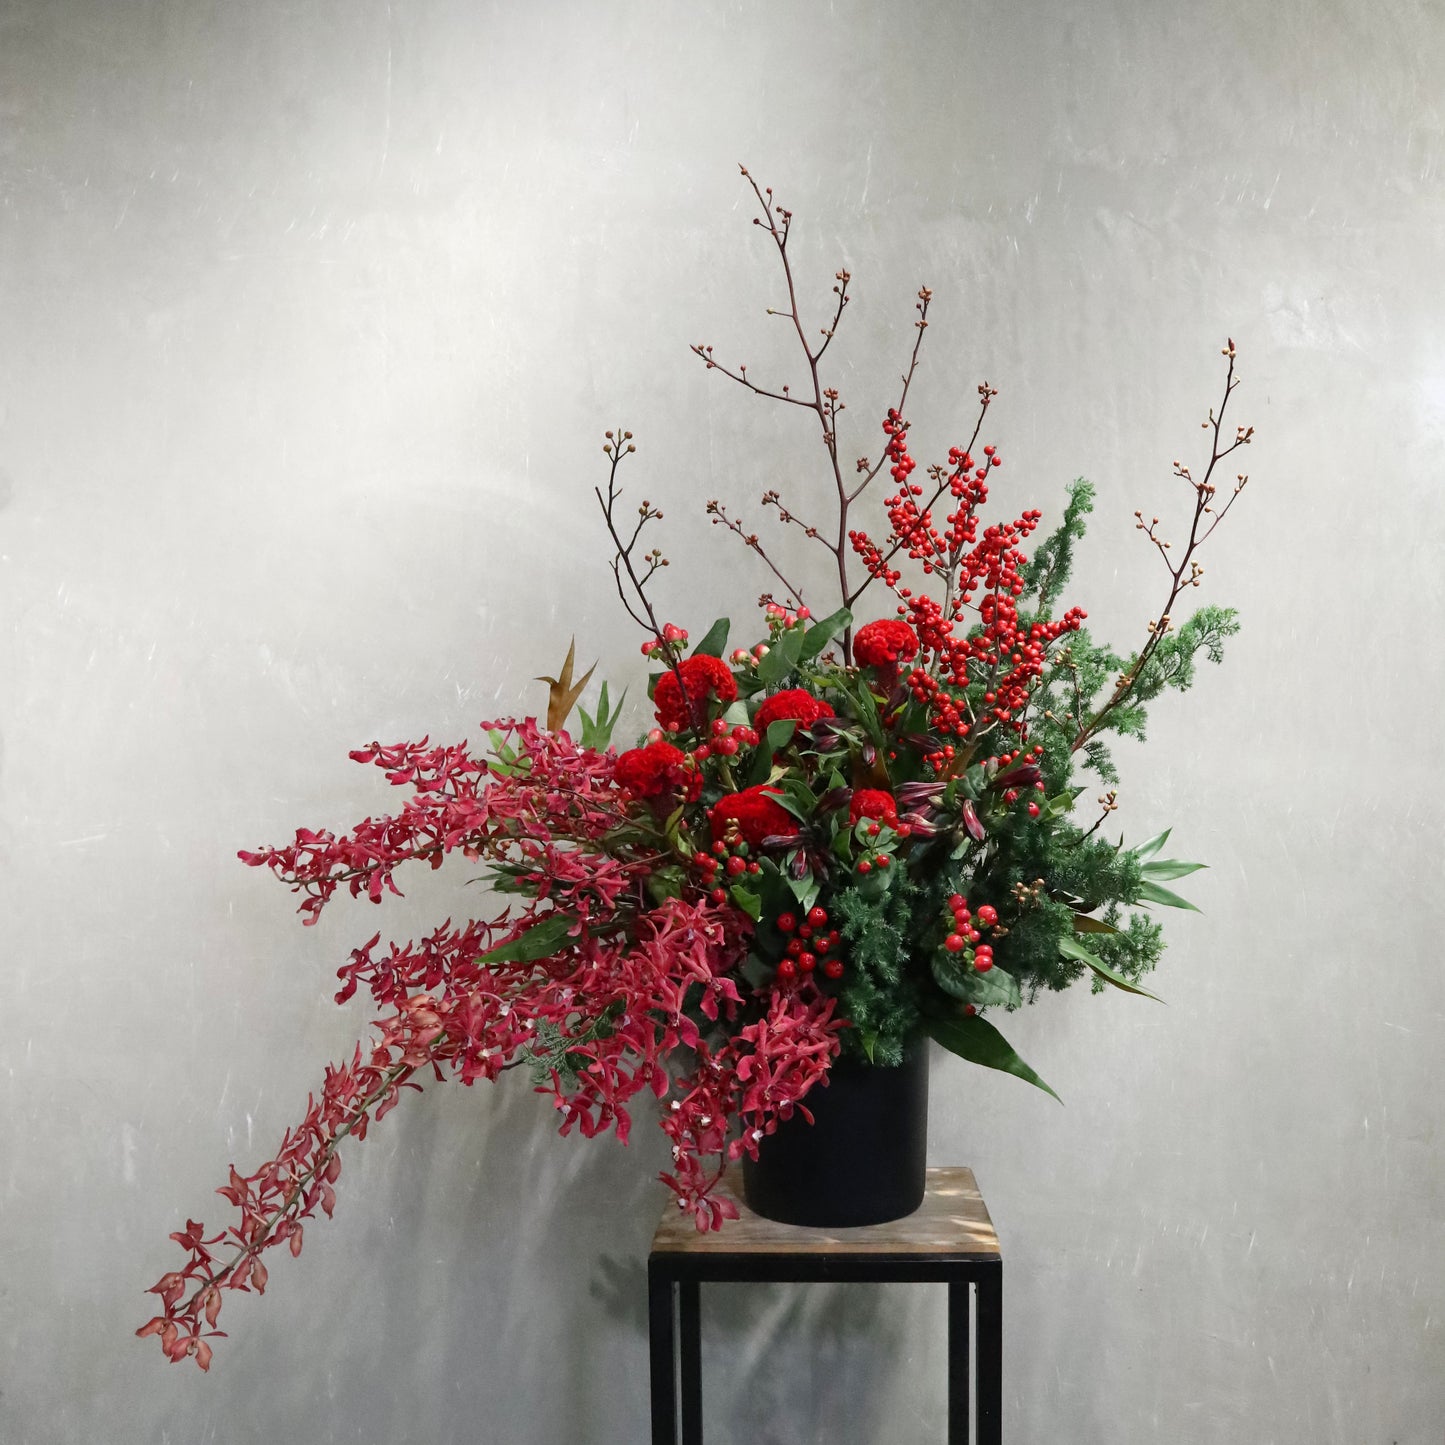 CNY Flower Arrangement - "Fortune"